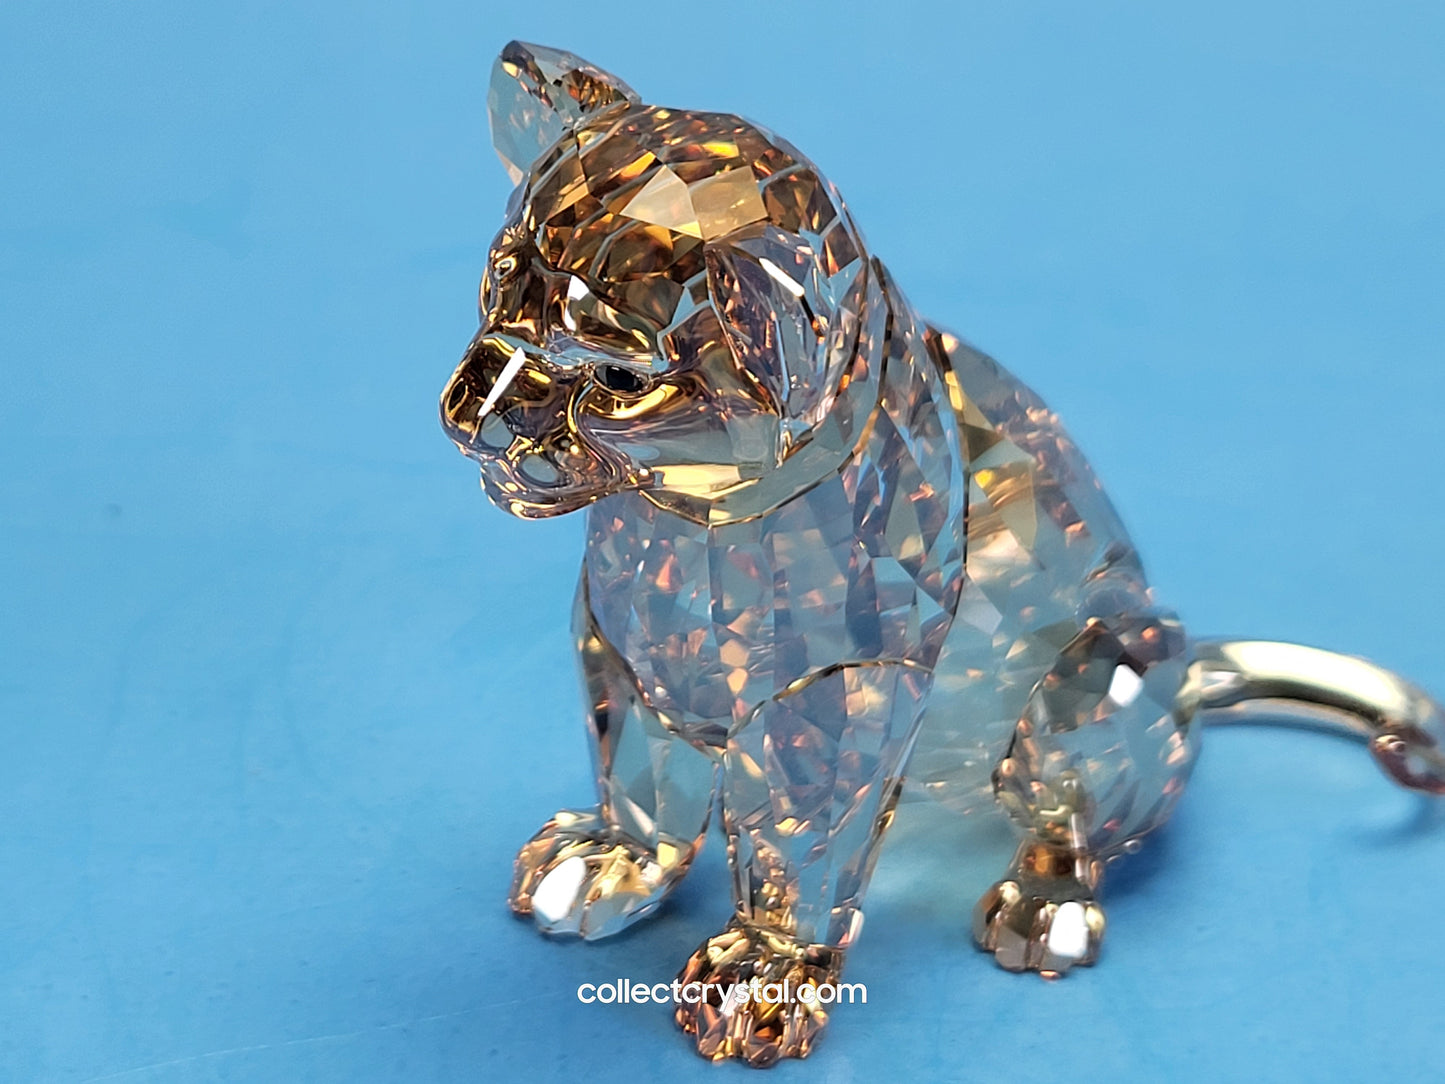 LION MOTHER & Cub 5135895, 5135896 SCS 2016 Signed by Designer lioness. lion